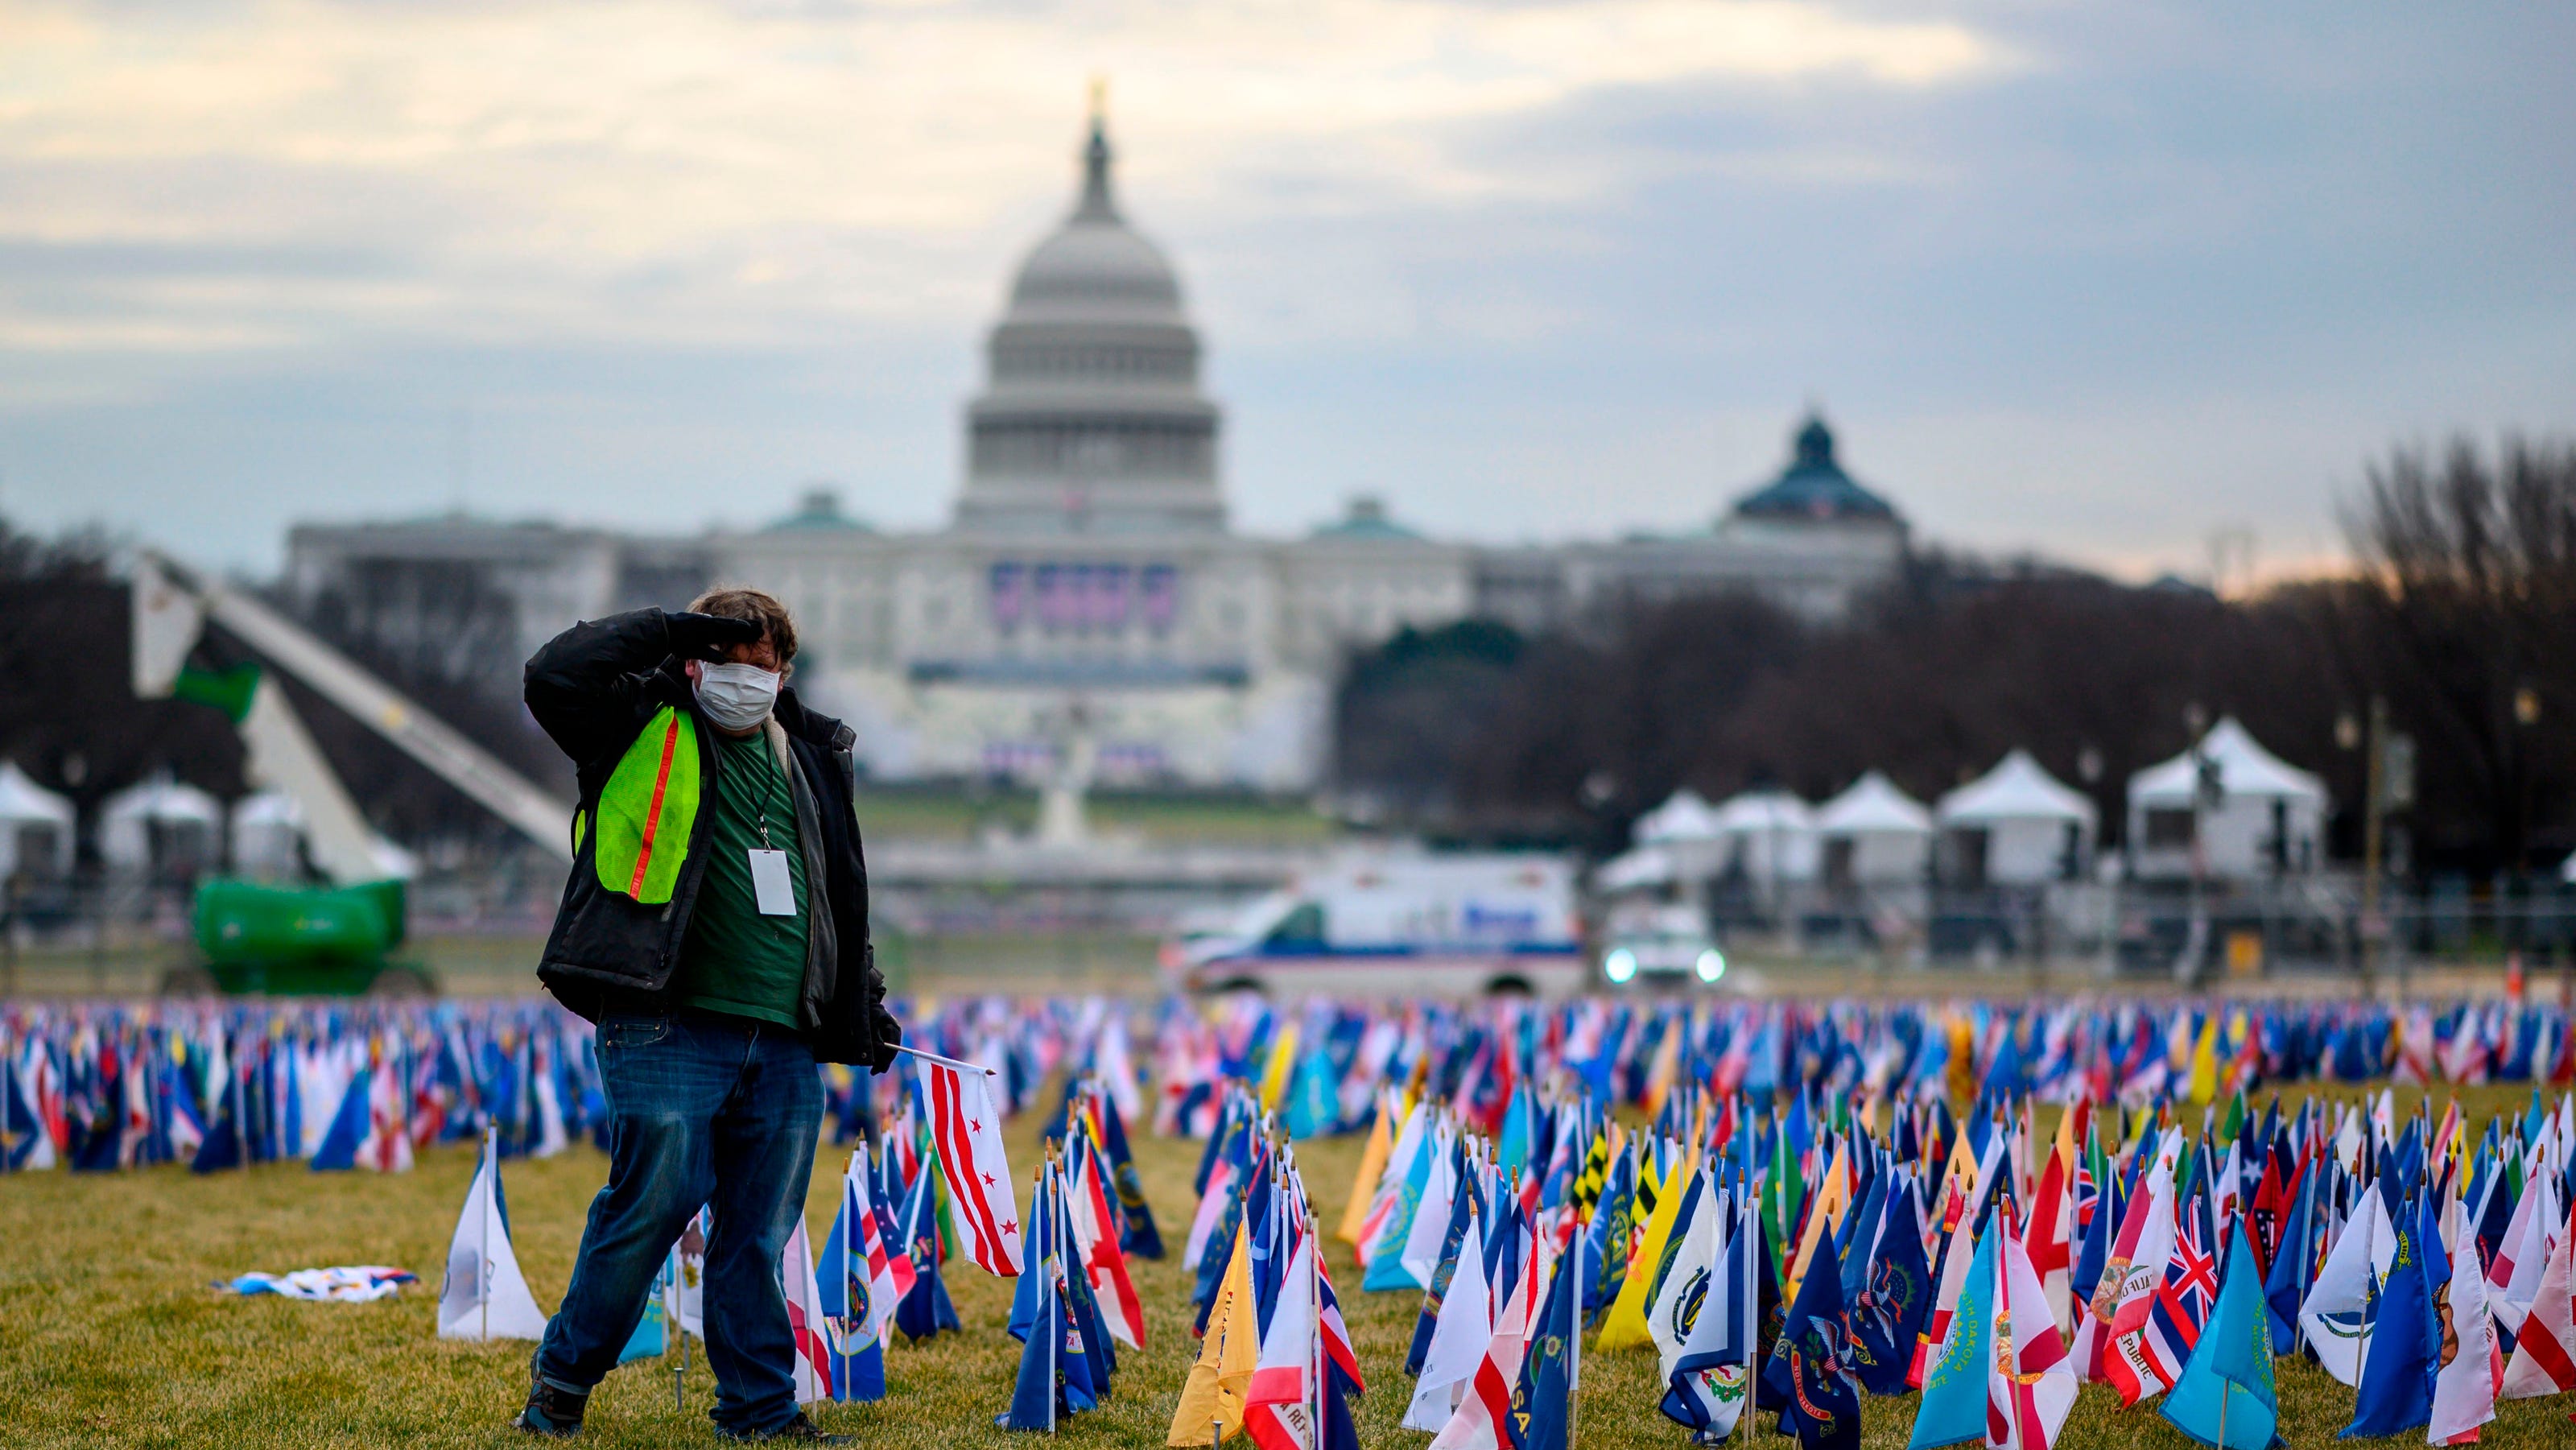 Flags on National Mall for Joe Biden inauguration Photos show calm DC